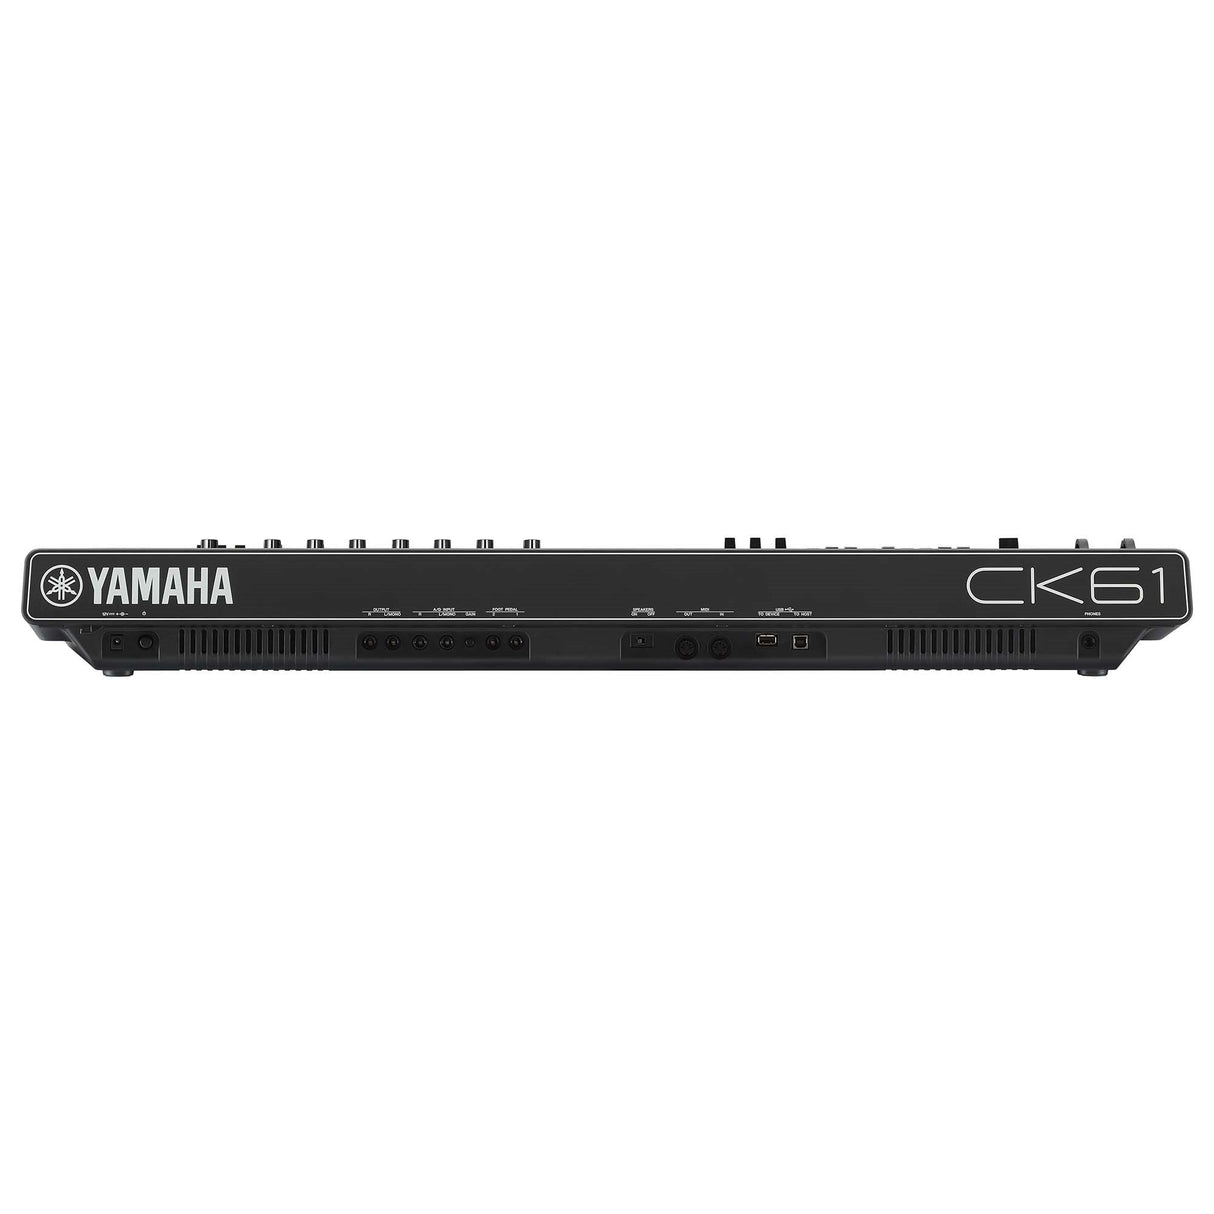 yamaha ck61 black connectivity back panel